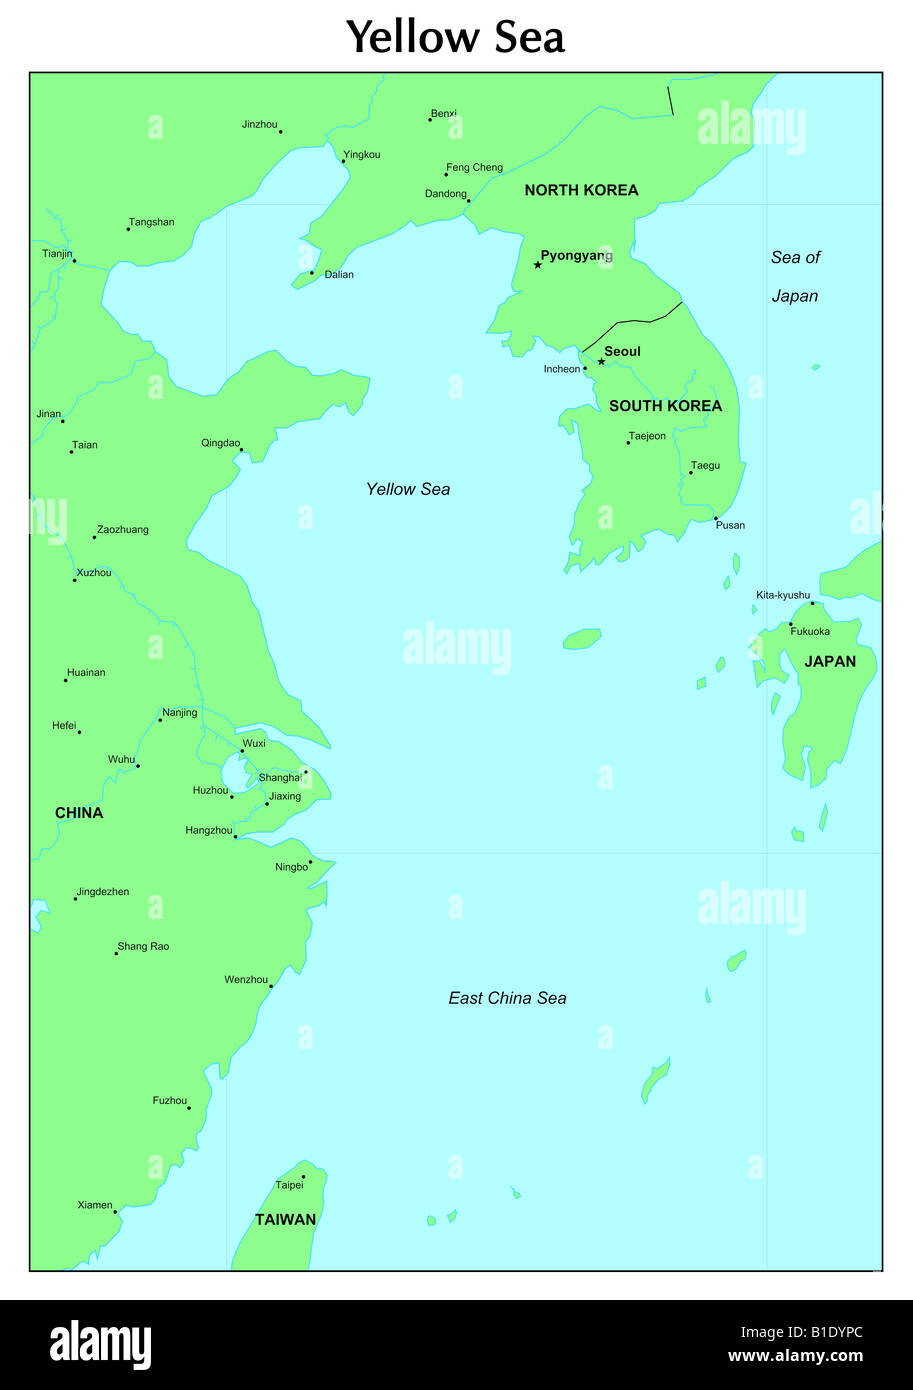 Yellow Sea map Stock Photo